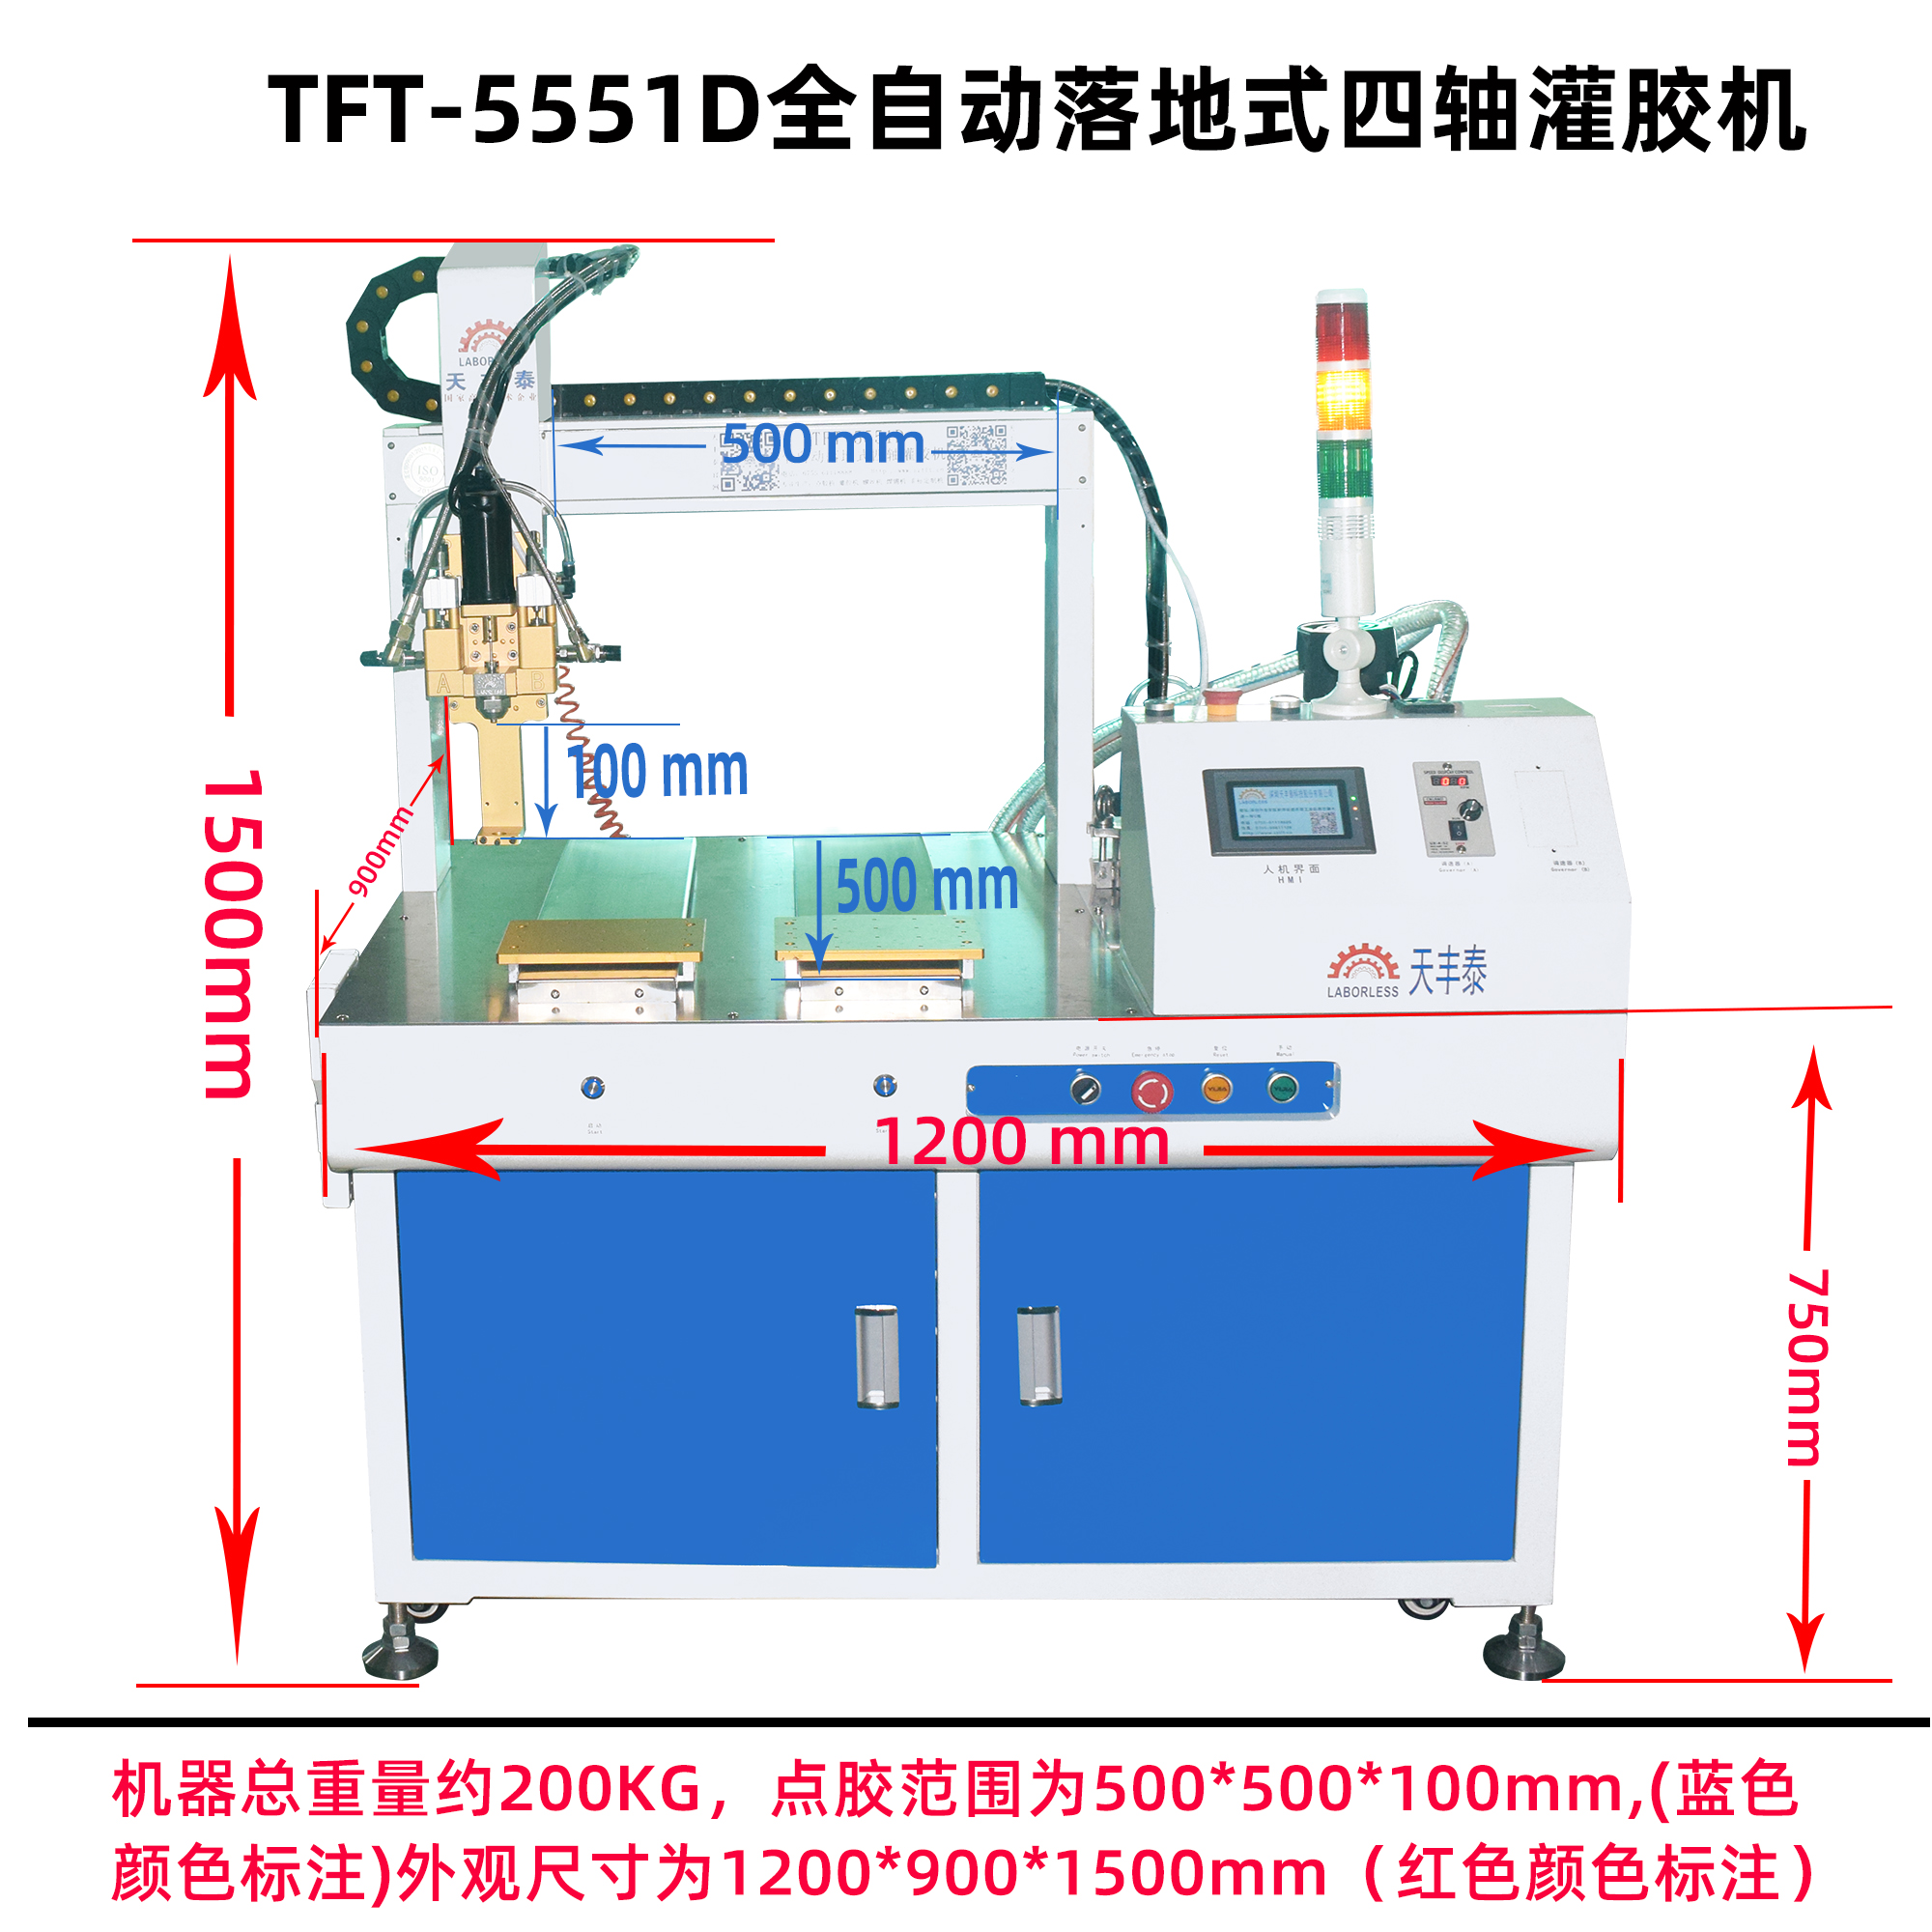 TFT-5551D全自动落地式四轴灌胶机产品尺寸图